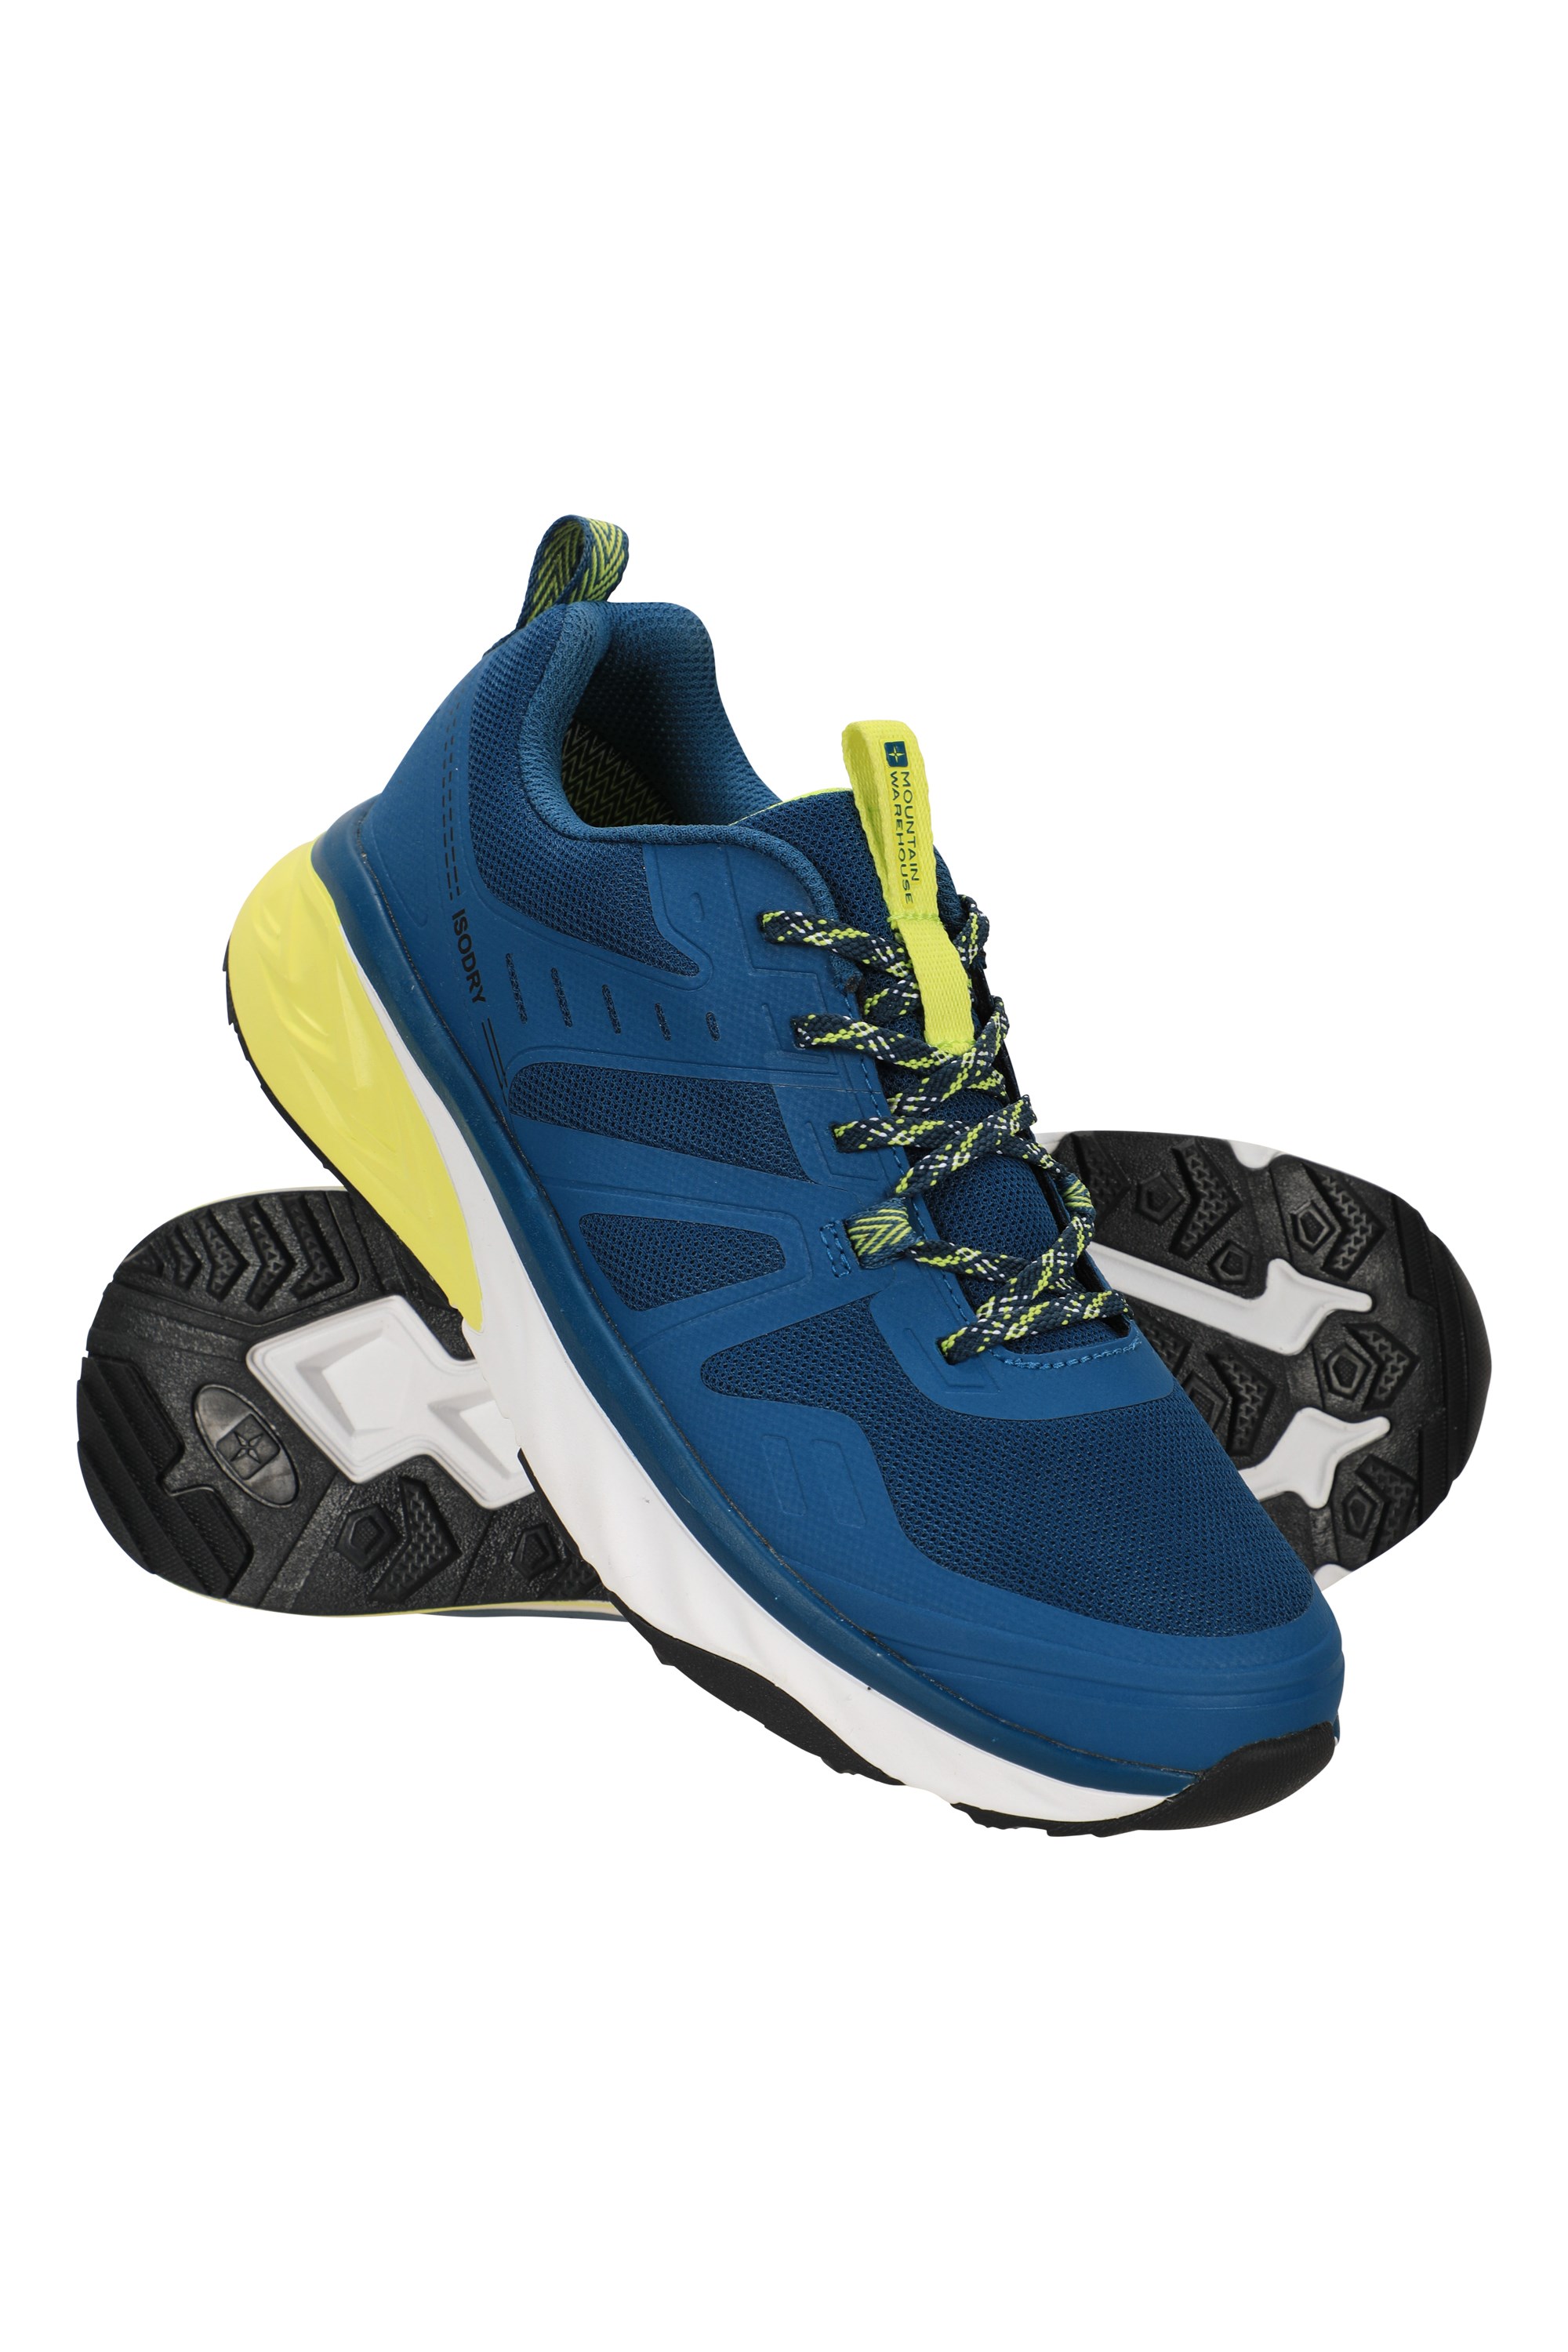 Accelerate Womens Waterproof Running Shoes - Blue